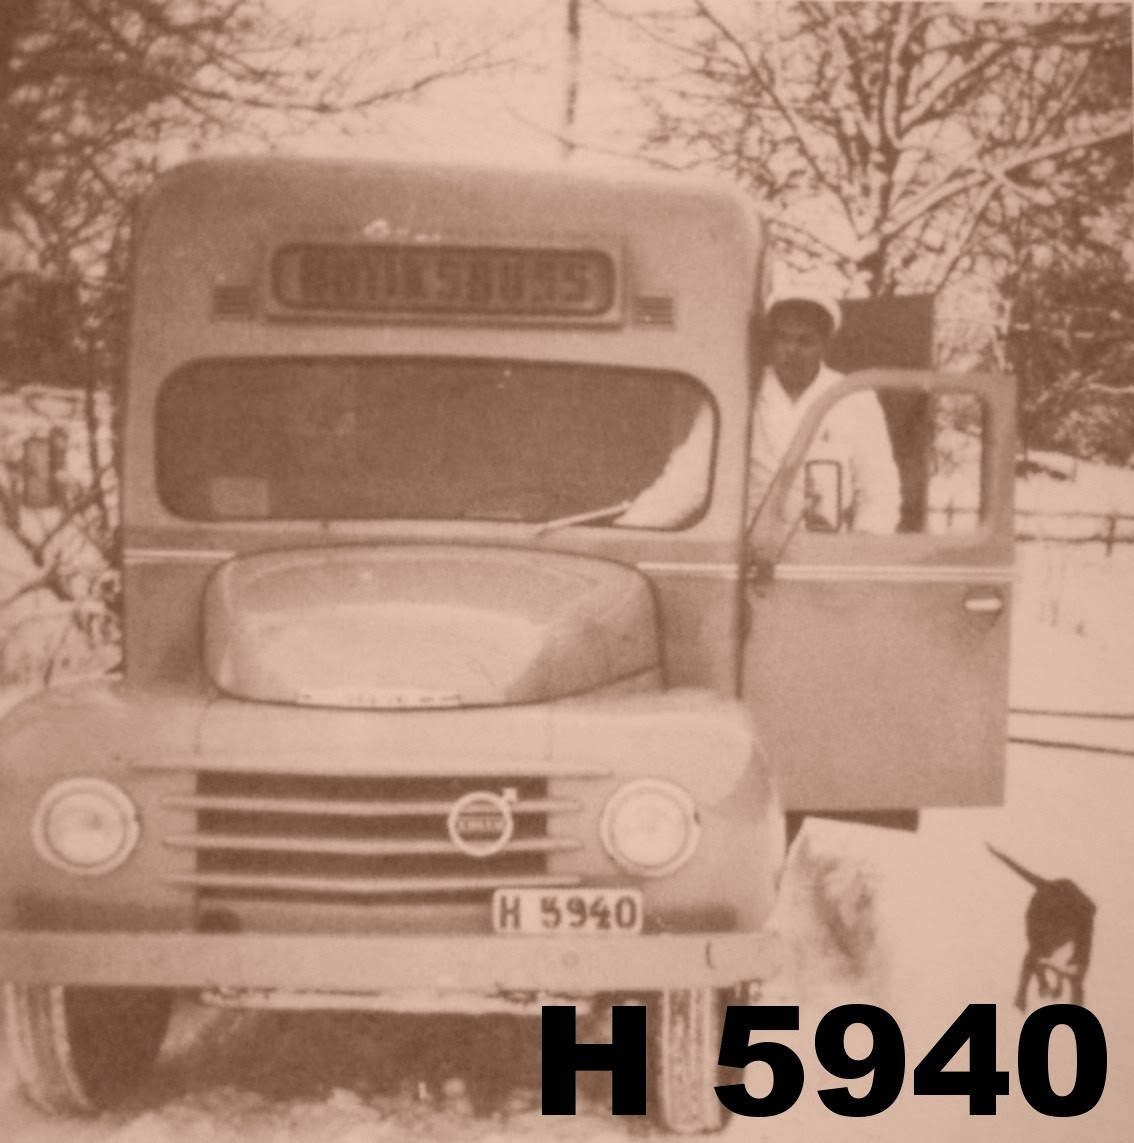 H 5940 Volvo L 340 1955